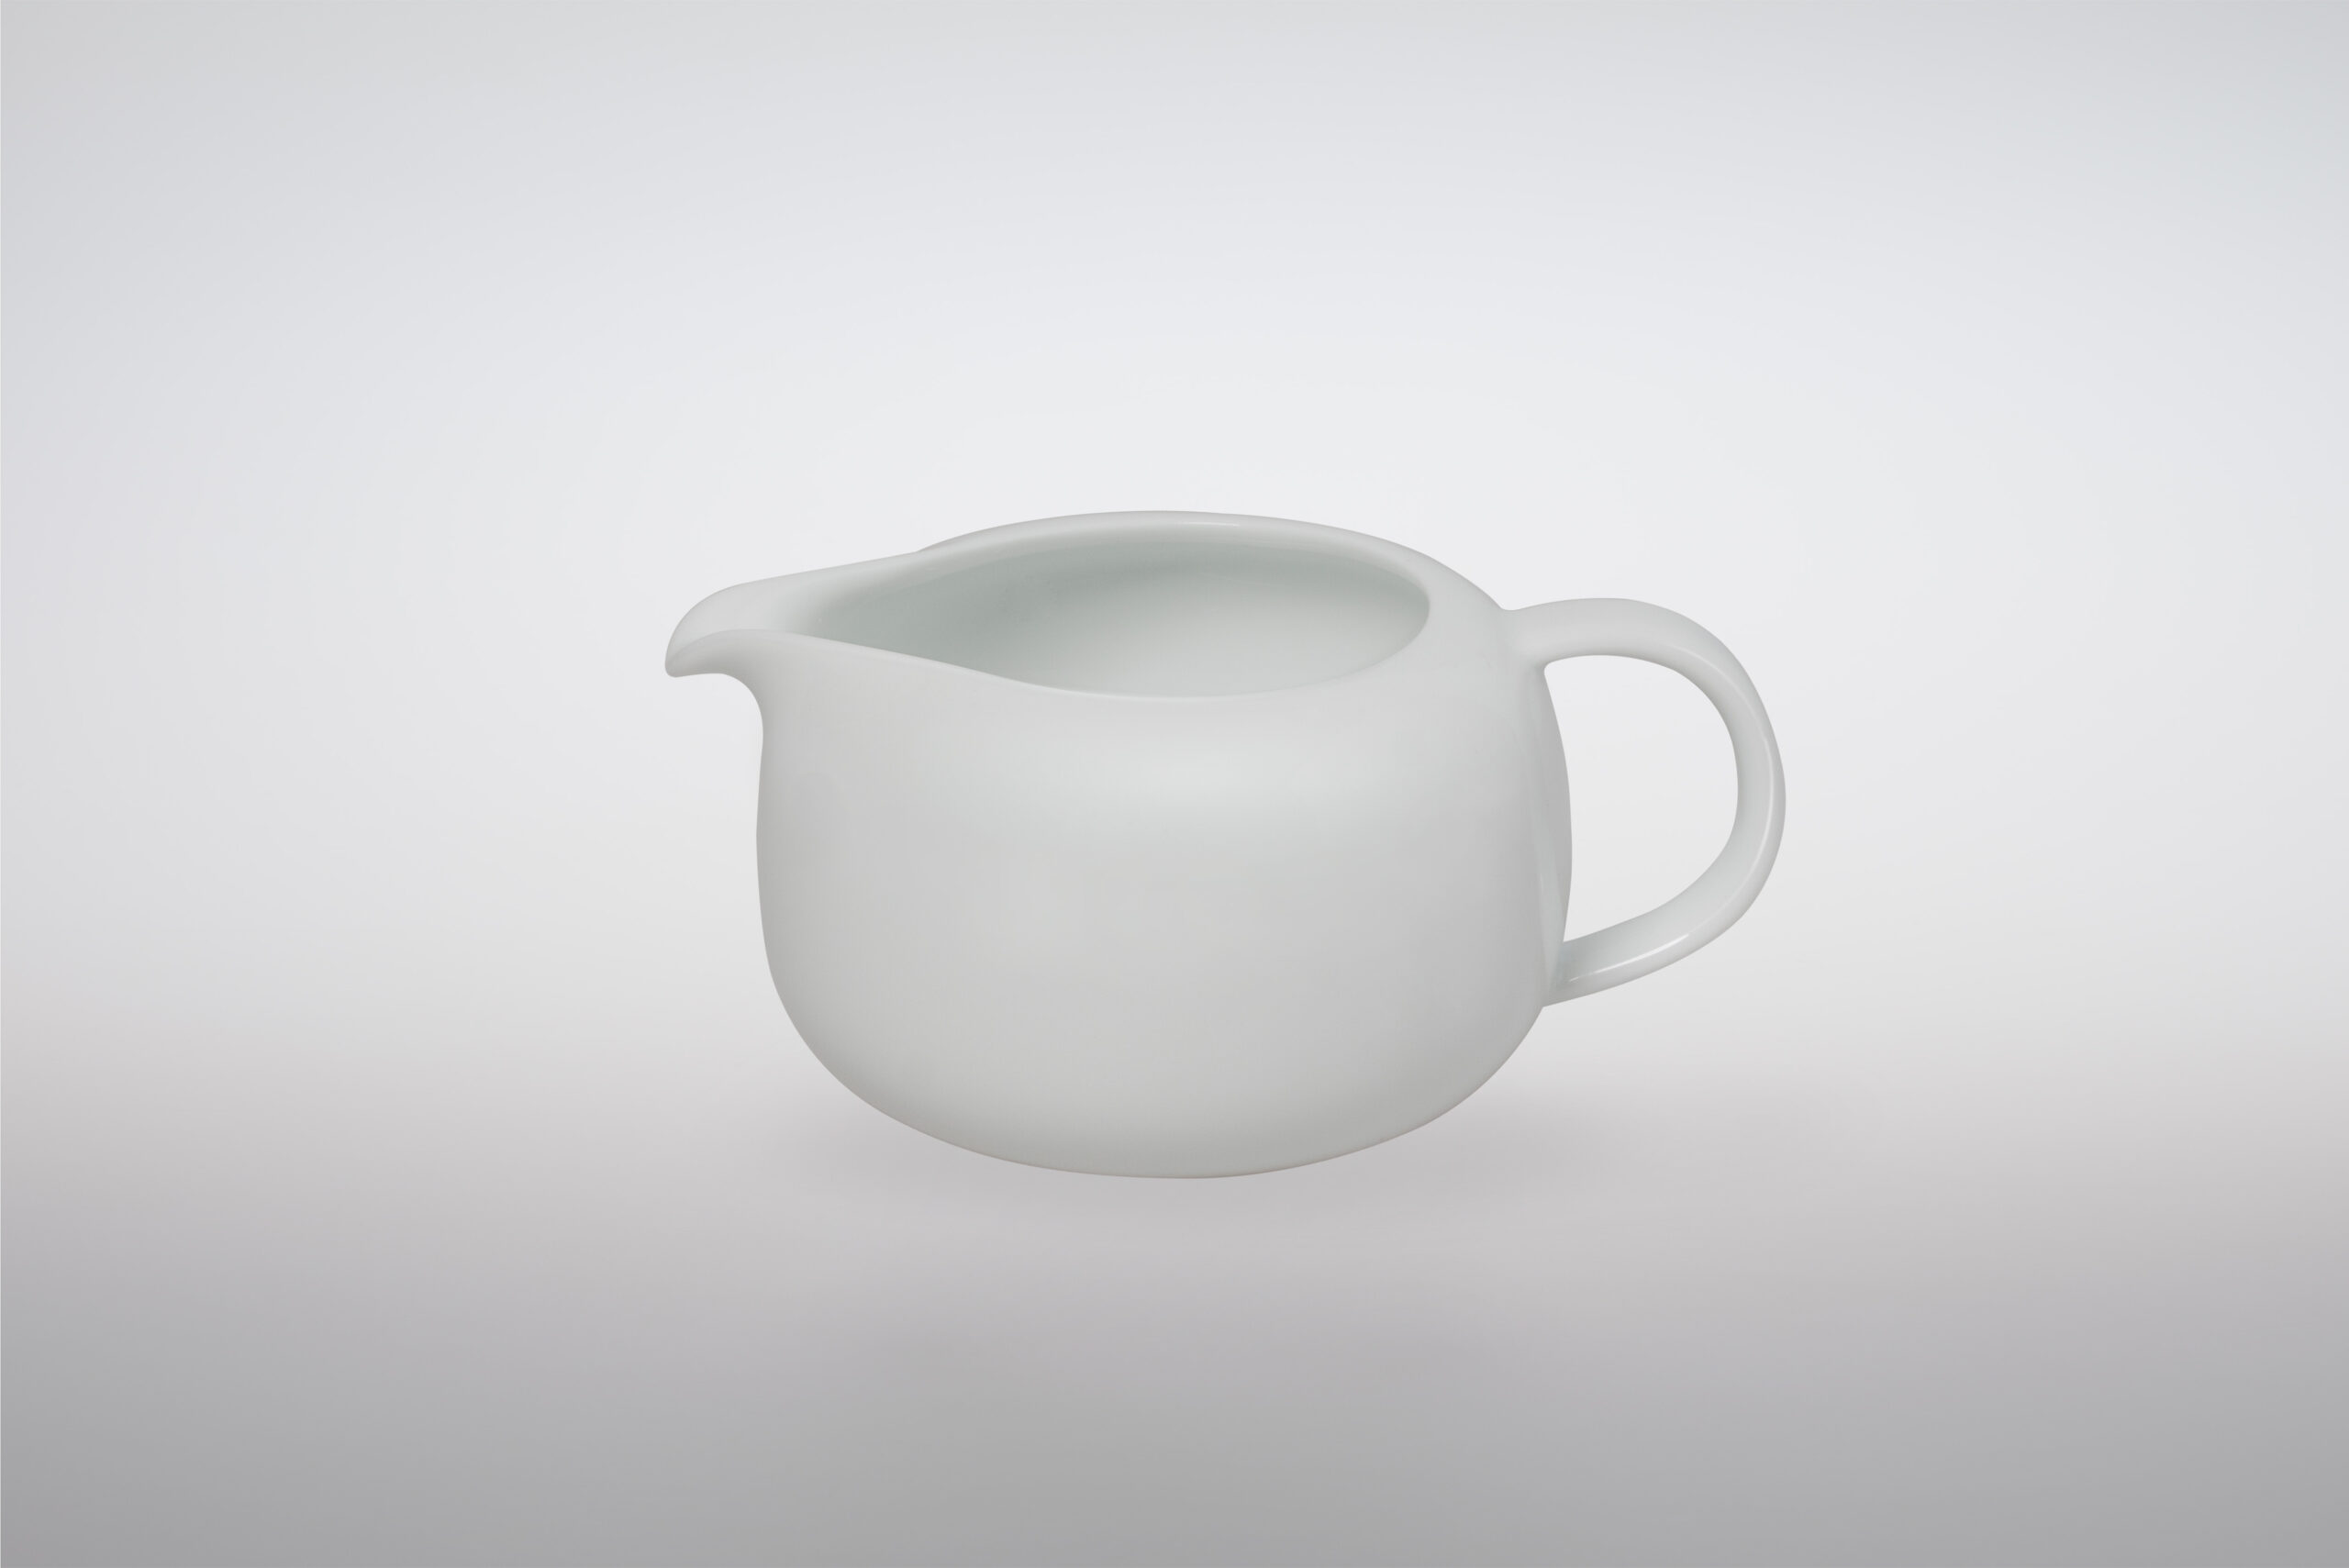 Chinese-style Porcelain Tea Serving Pot 300ml